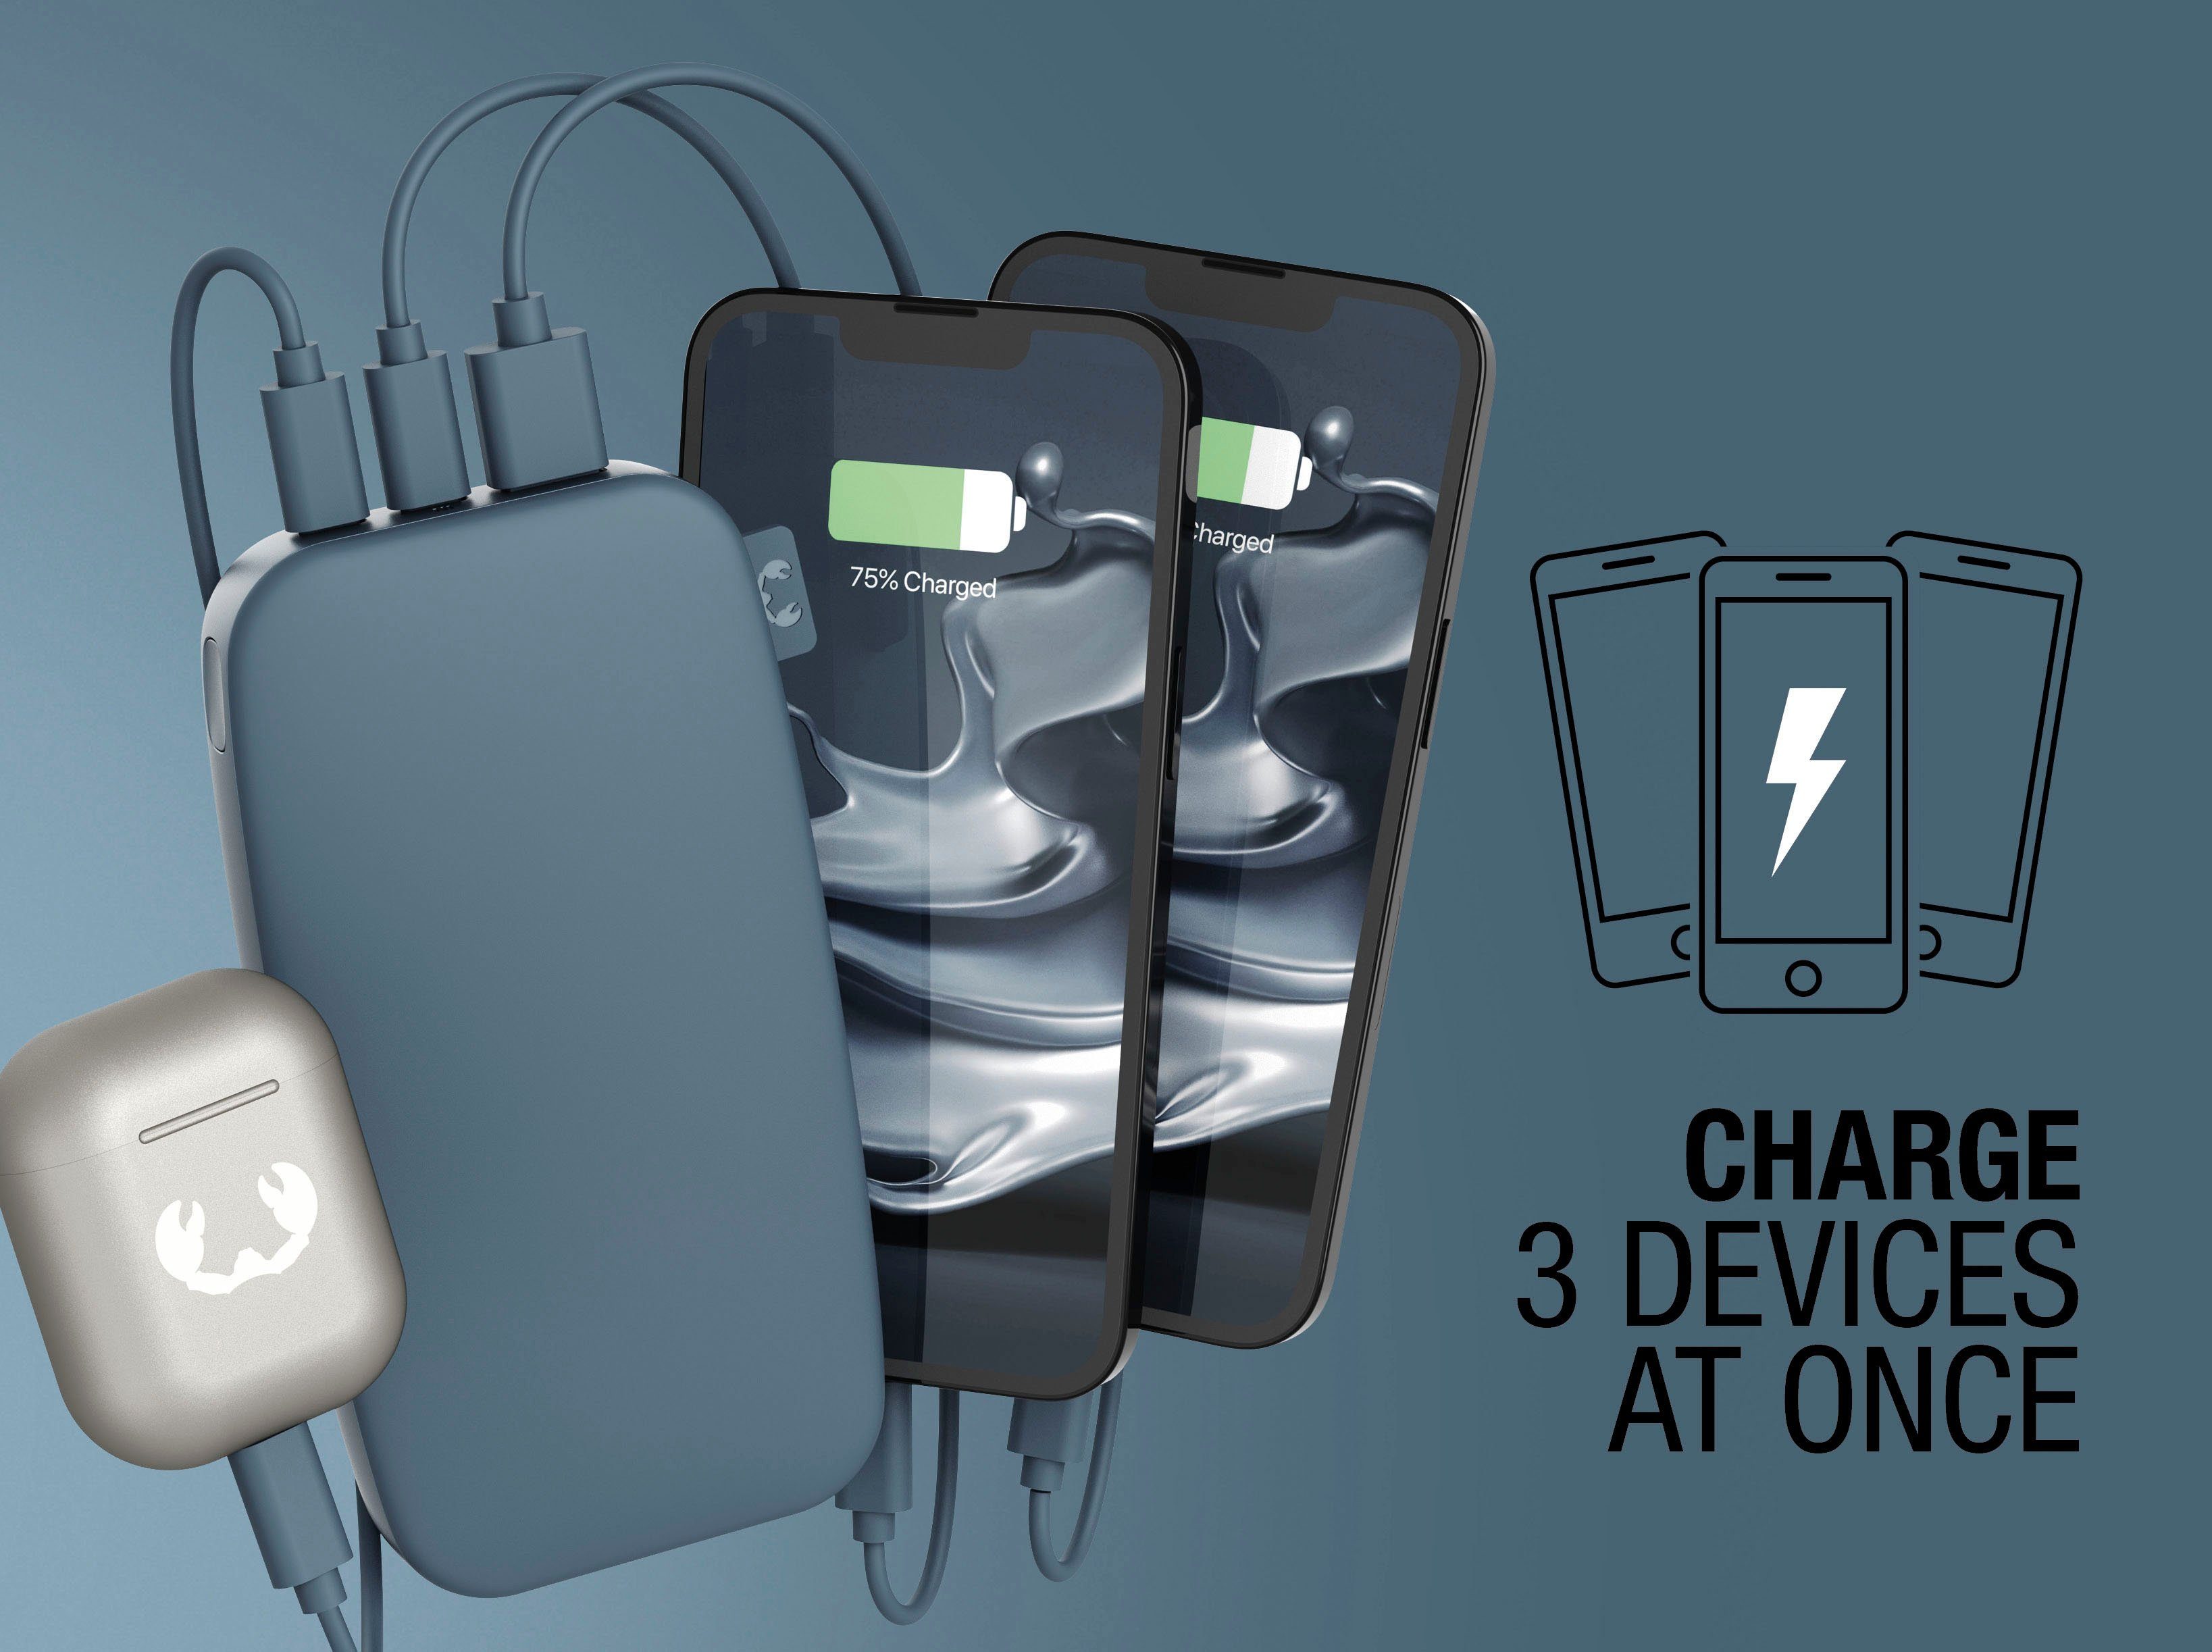 Fresh´n Rebel Power Pack & 18000mAh Charge Fast mit 20W PD USB-C, dunkelblau Powerbank Ultra